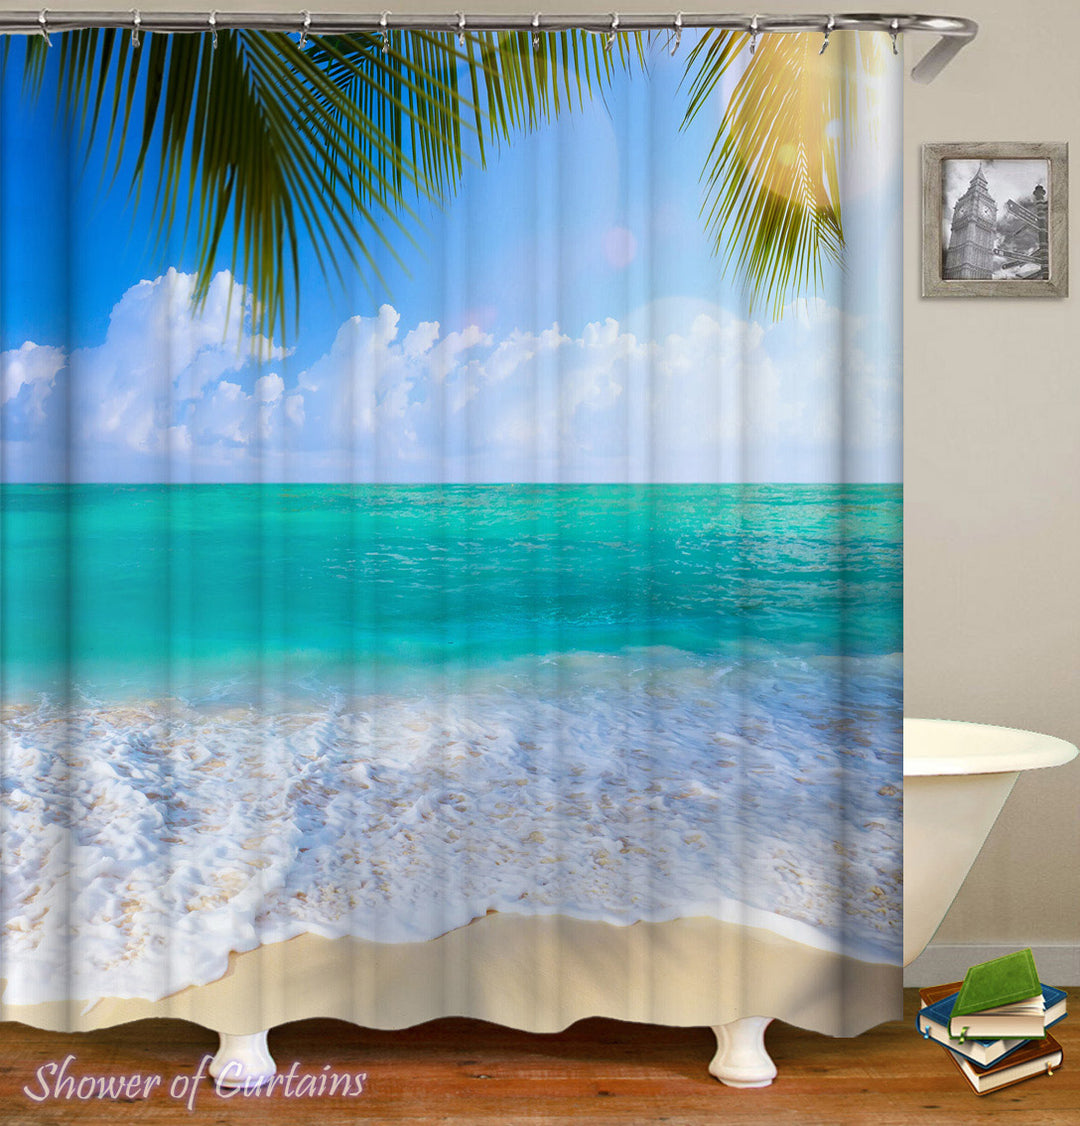 Ocean Shower Curtain - Peacefully Turquoise Beach Shower Curtain